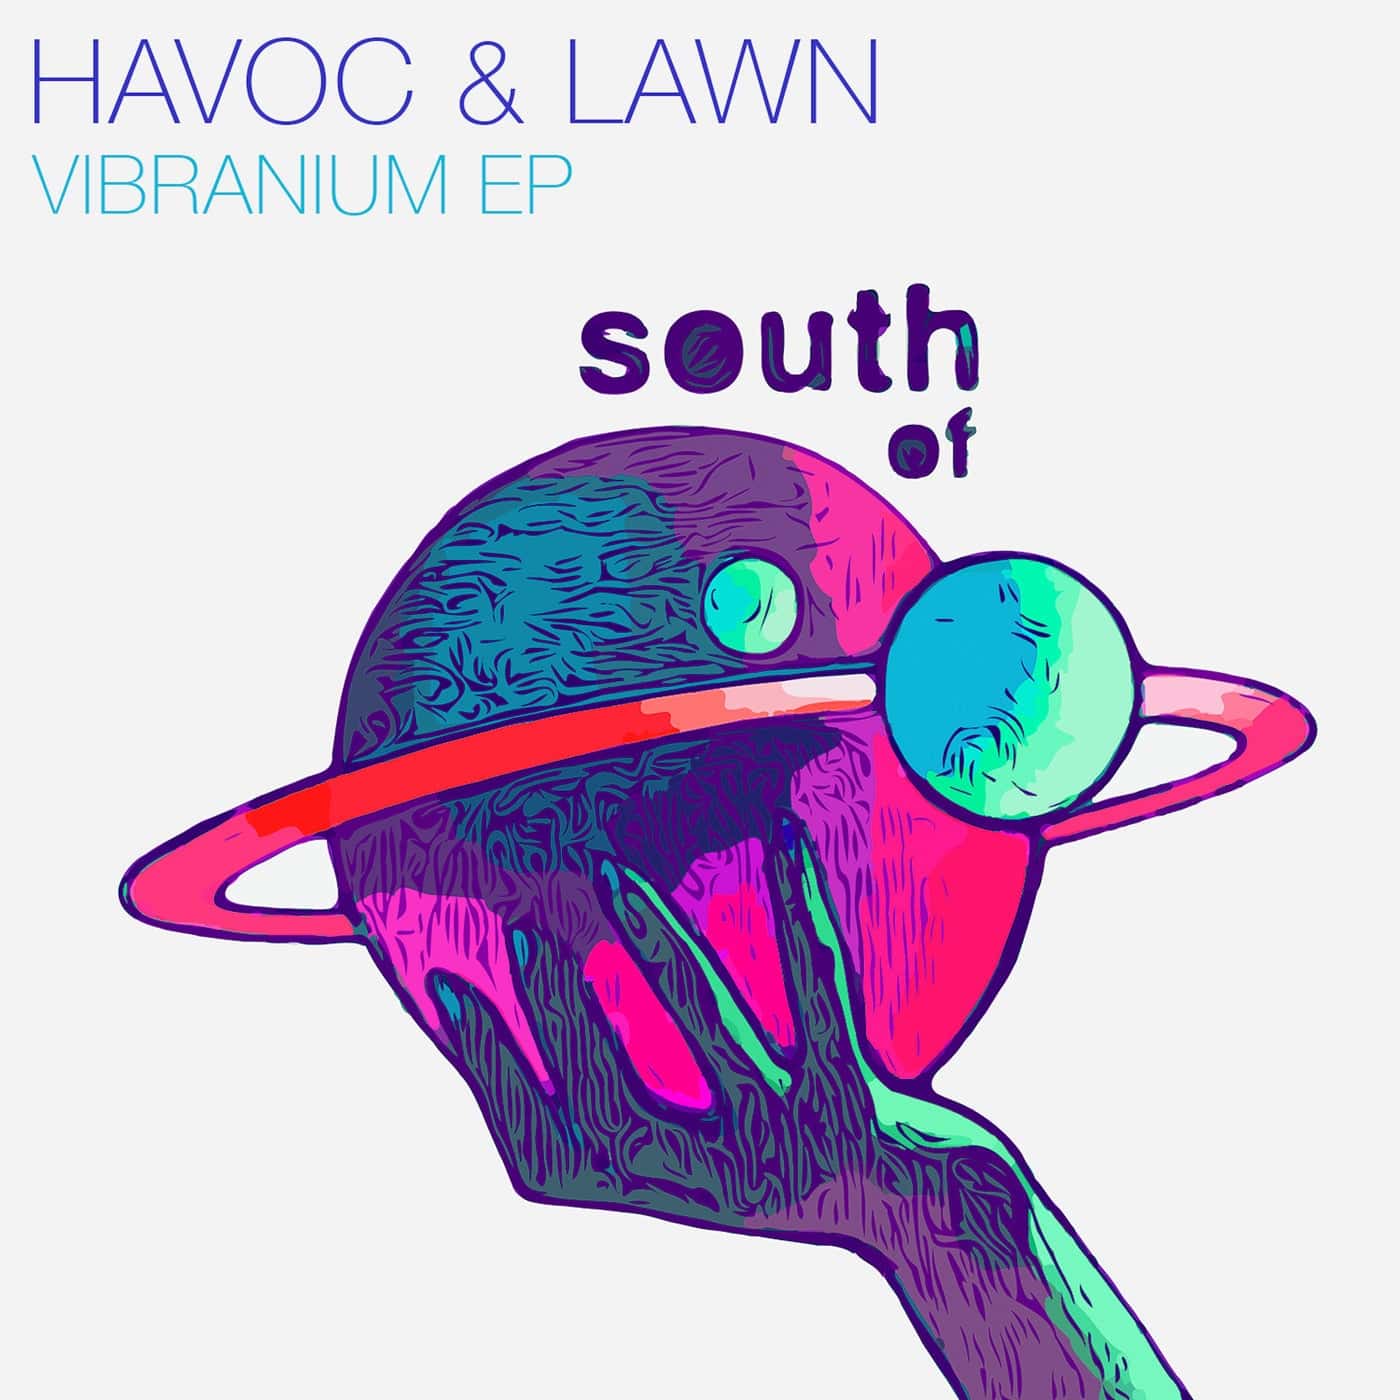 Download Havoc & Lawn - Vibranium EP on Electrobuzz